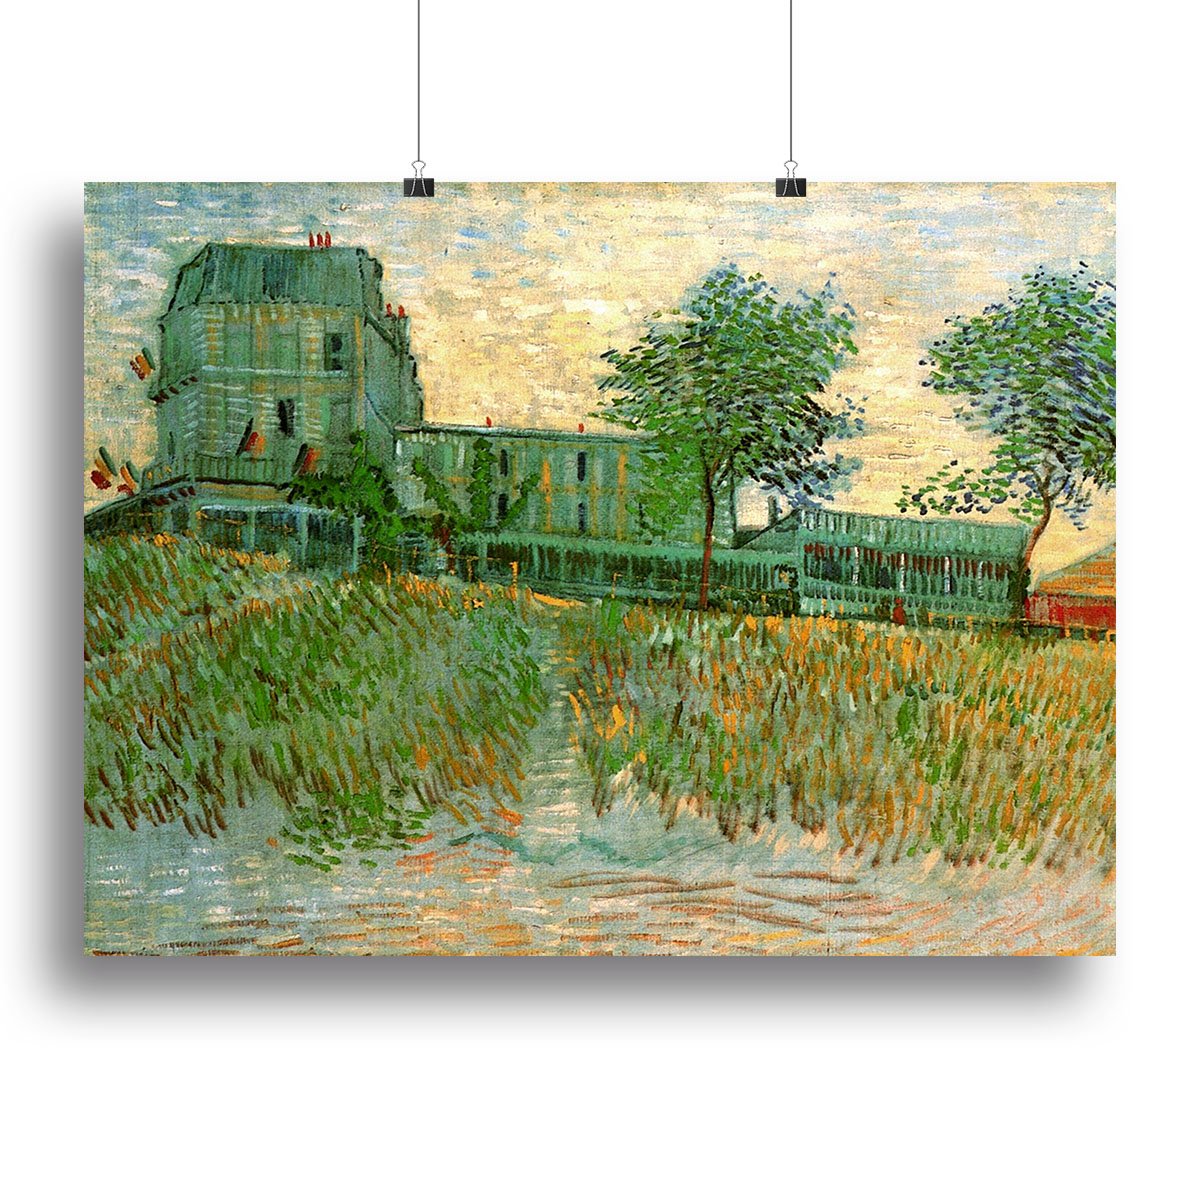 The Restaurant de la Sirene at Asnieres by Van Gogh Canvas Print or Poster